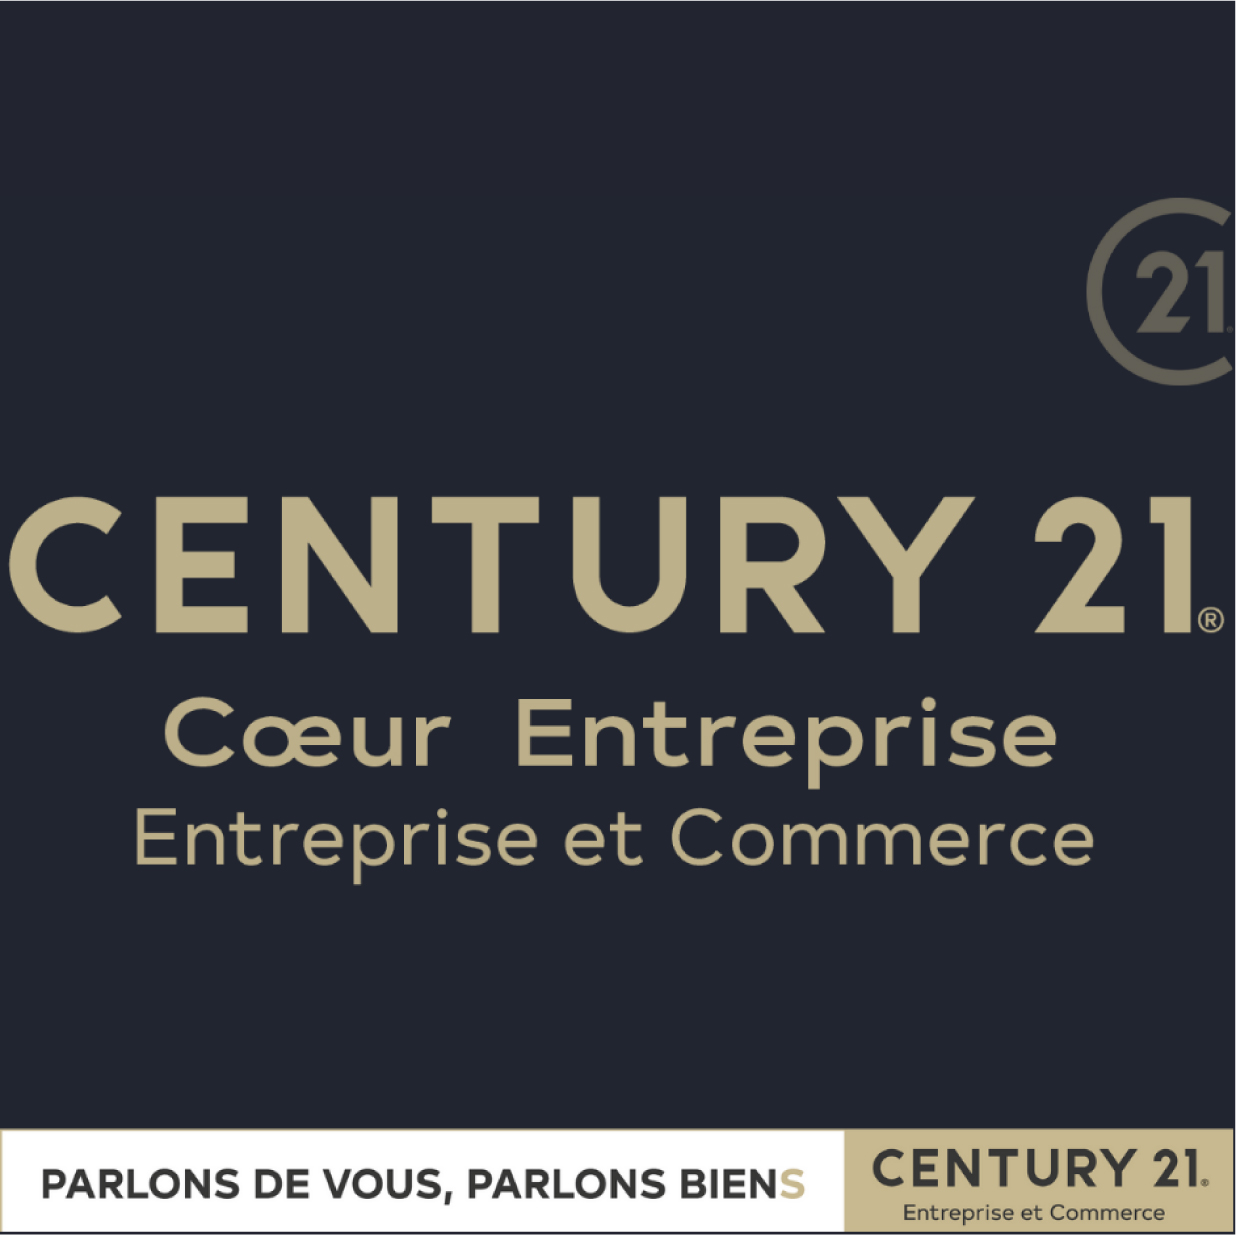 Century 21 Coeur Entreprise